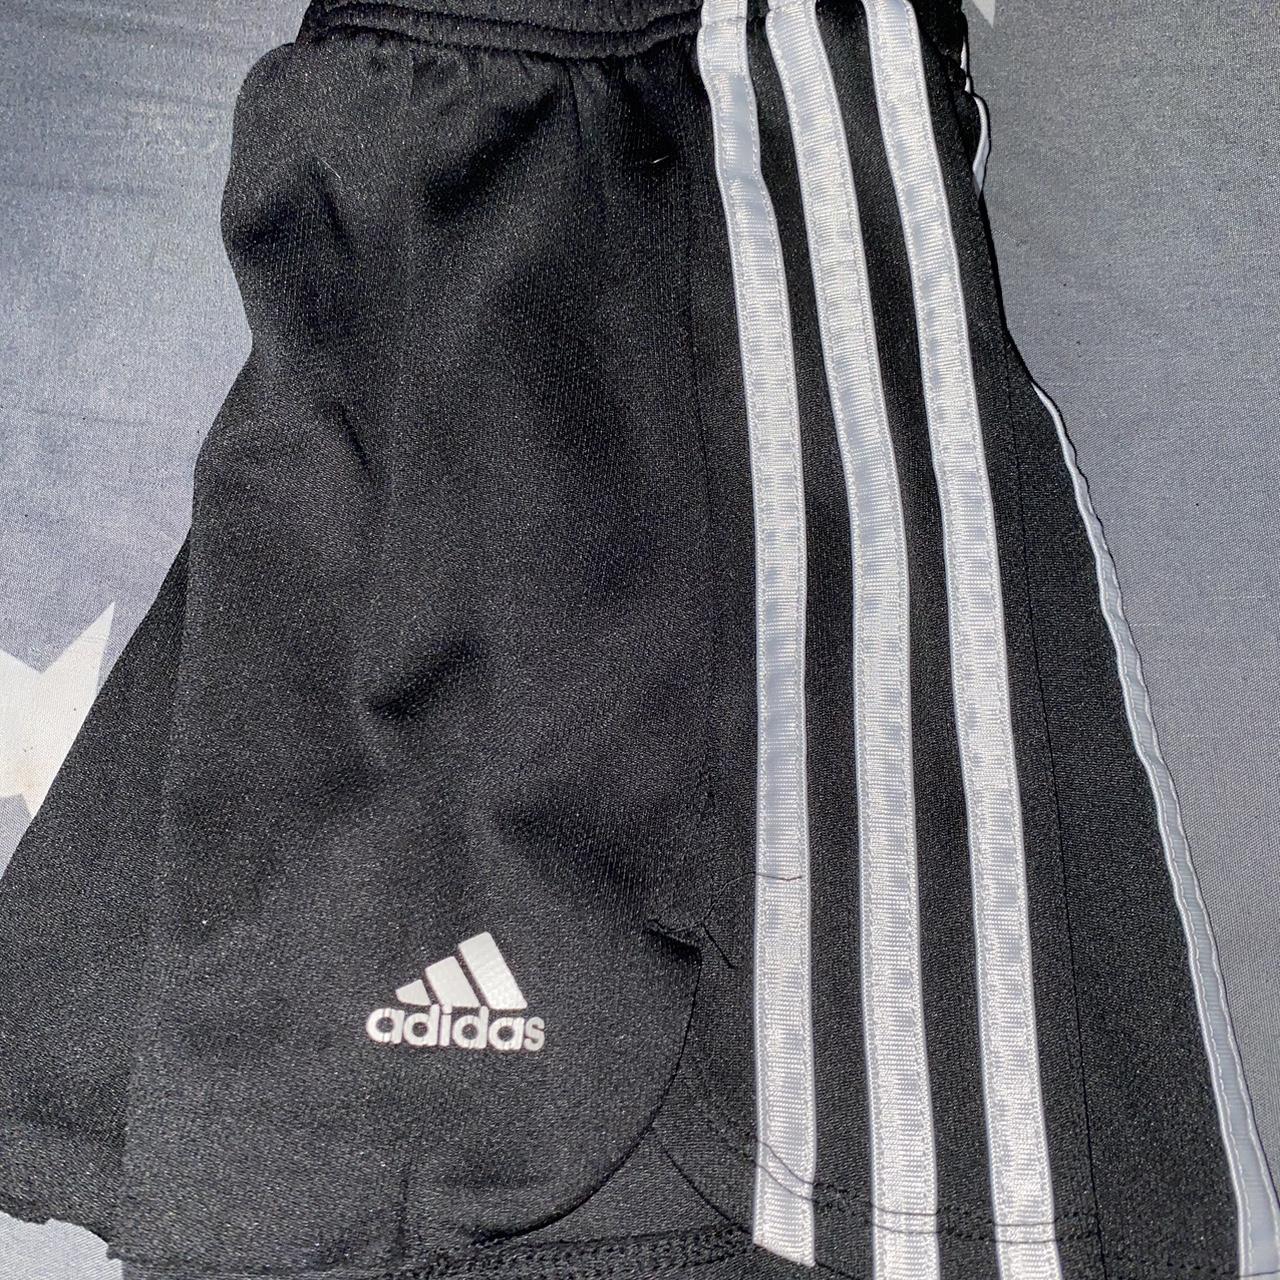 Kids Adidas short large #Adidas #kidsshorts #shorts - Depop